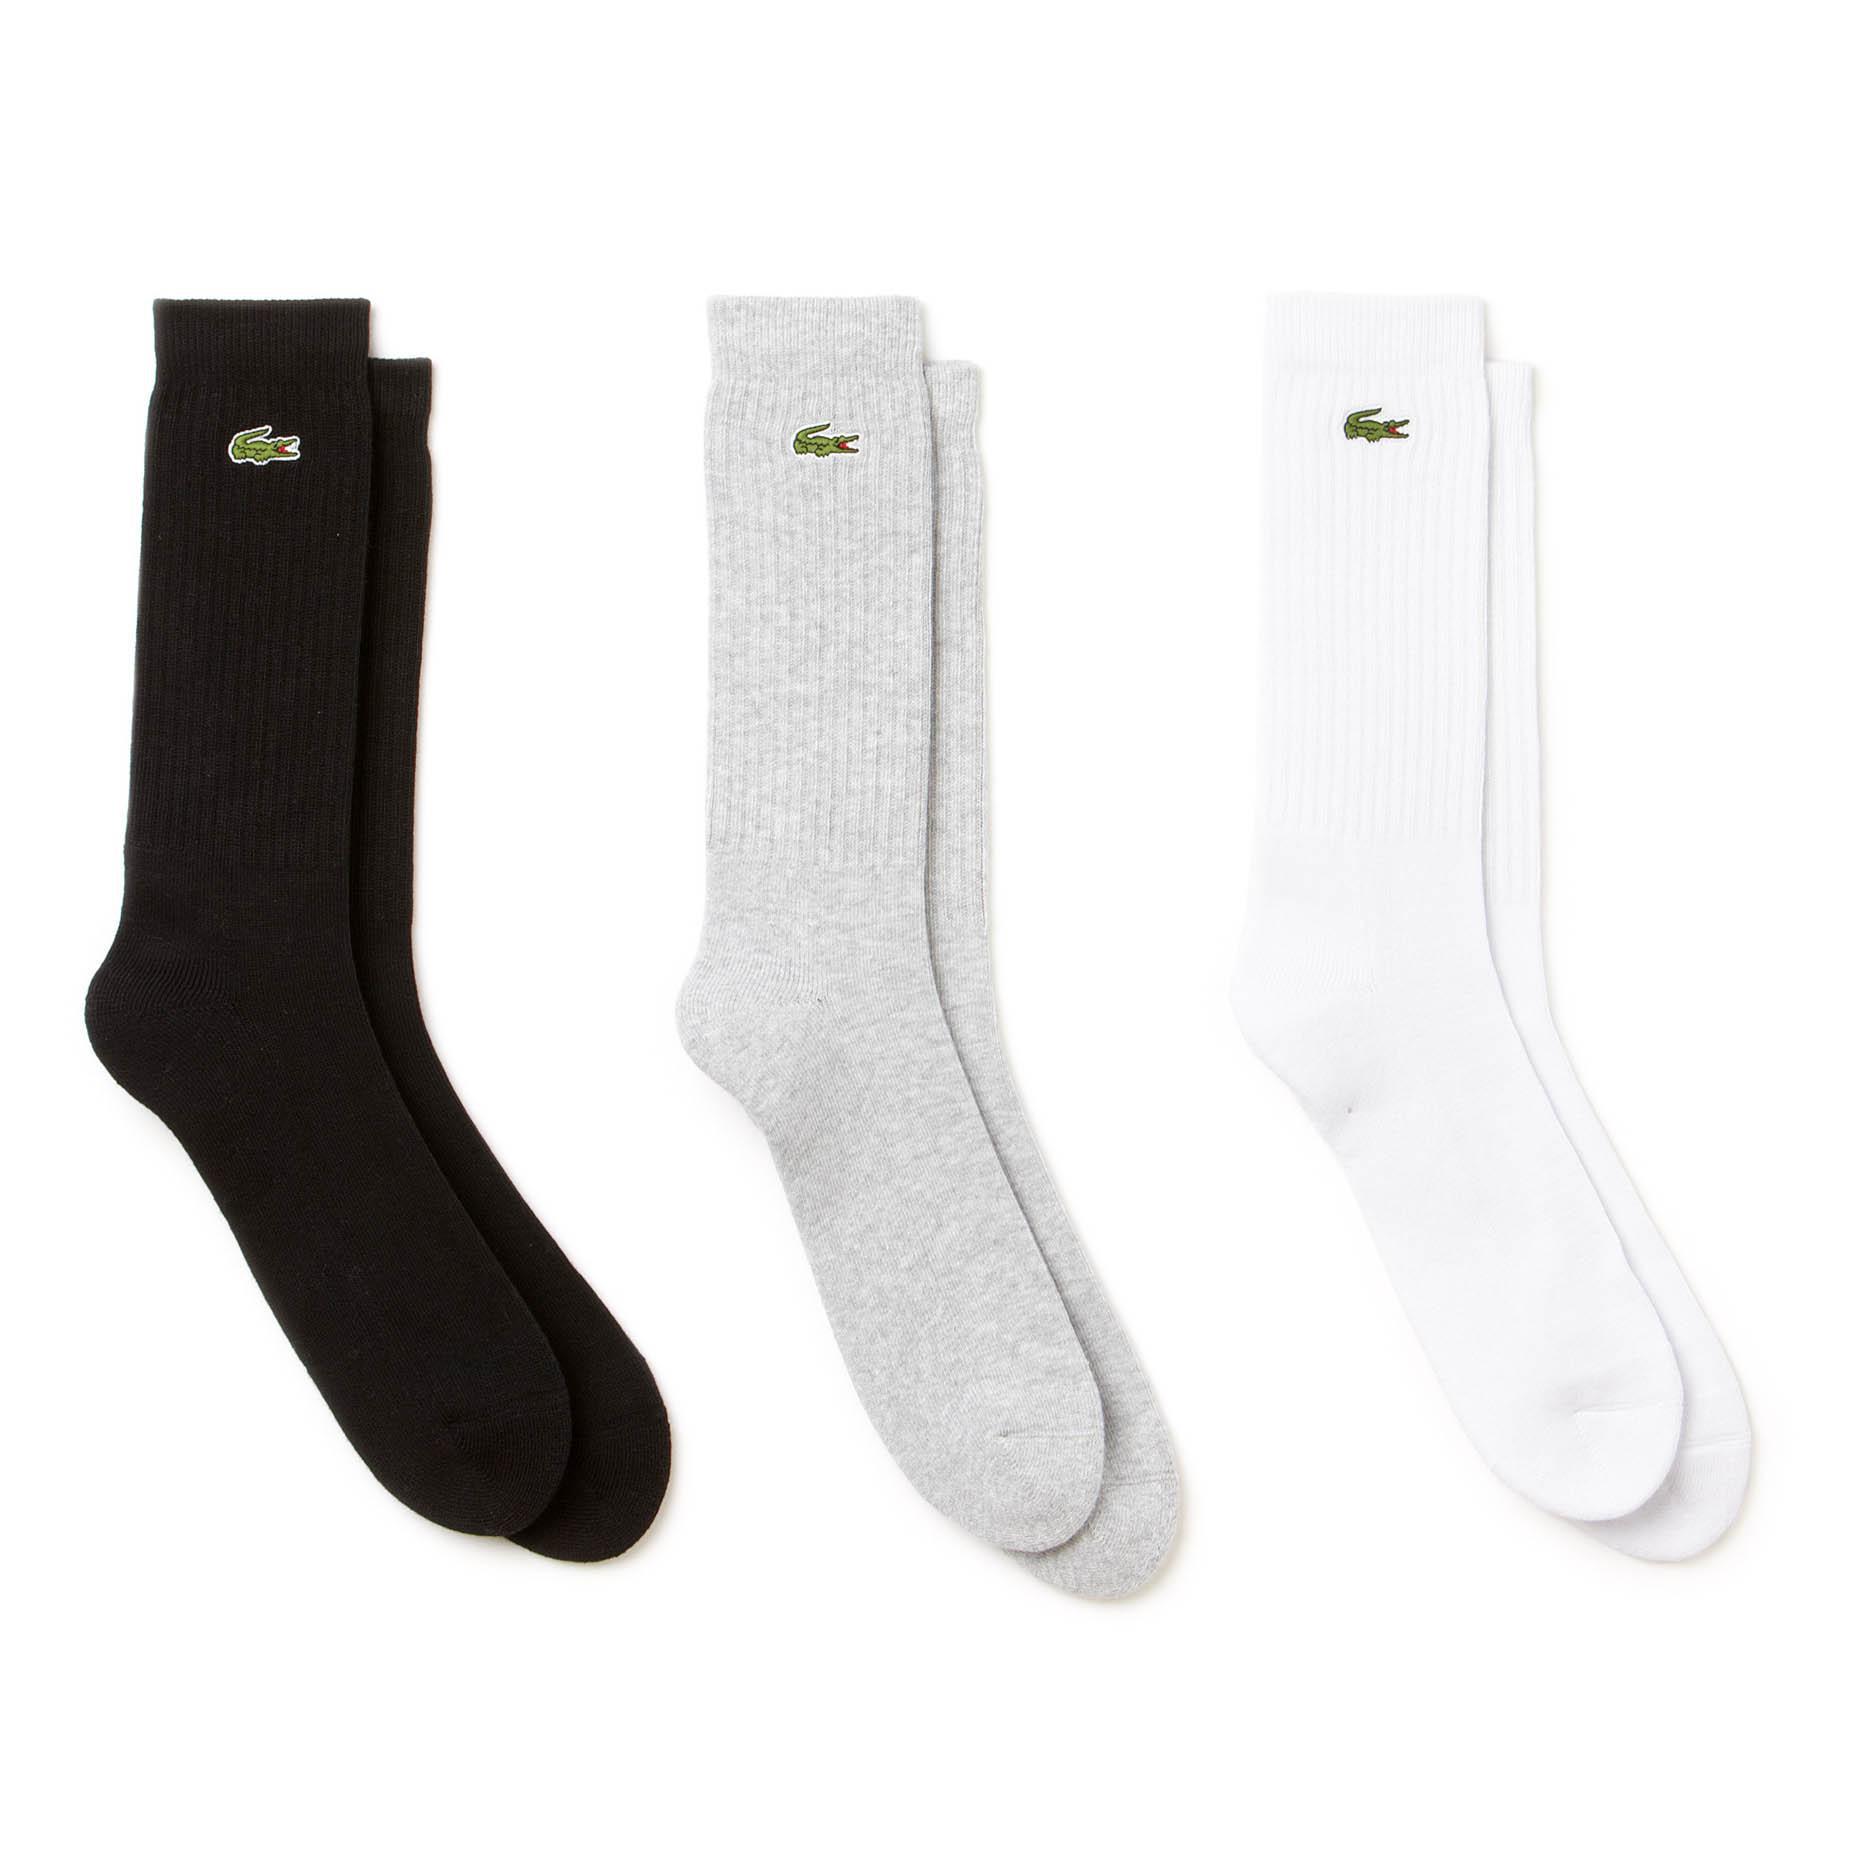 Lacoste Sport Socks (3 Pairs) - White/Light Grey/Black [7 1/2 to 11 ...